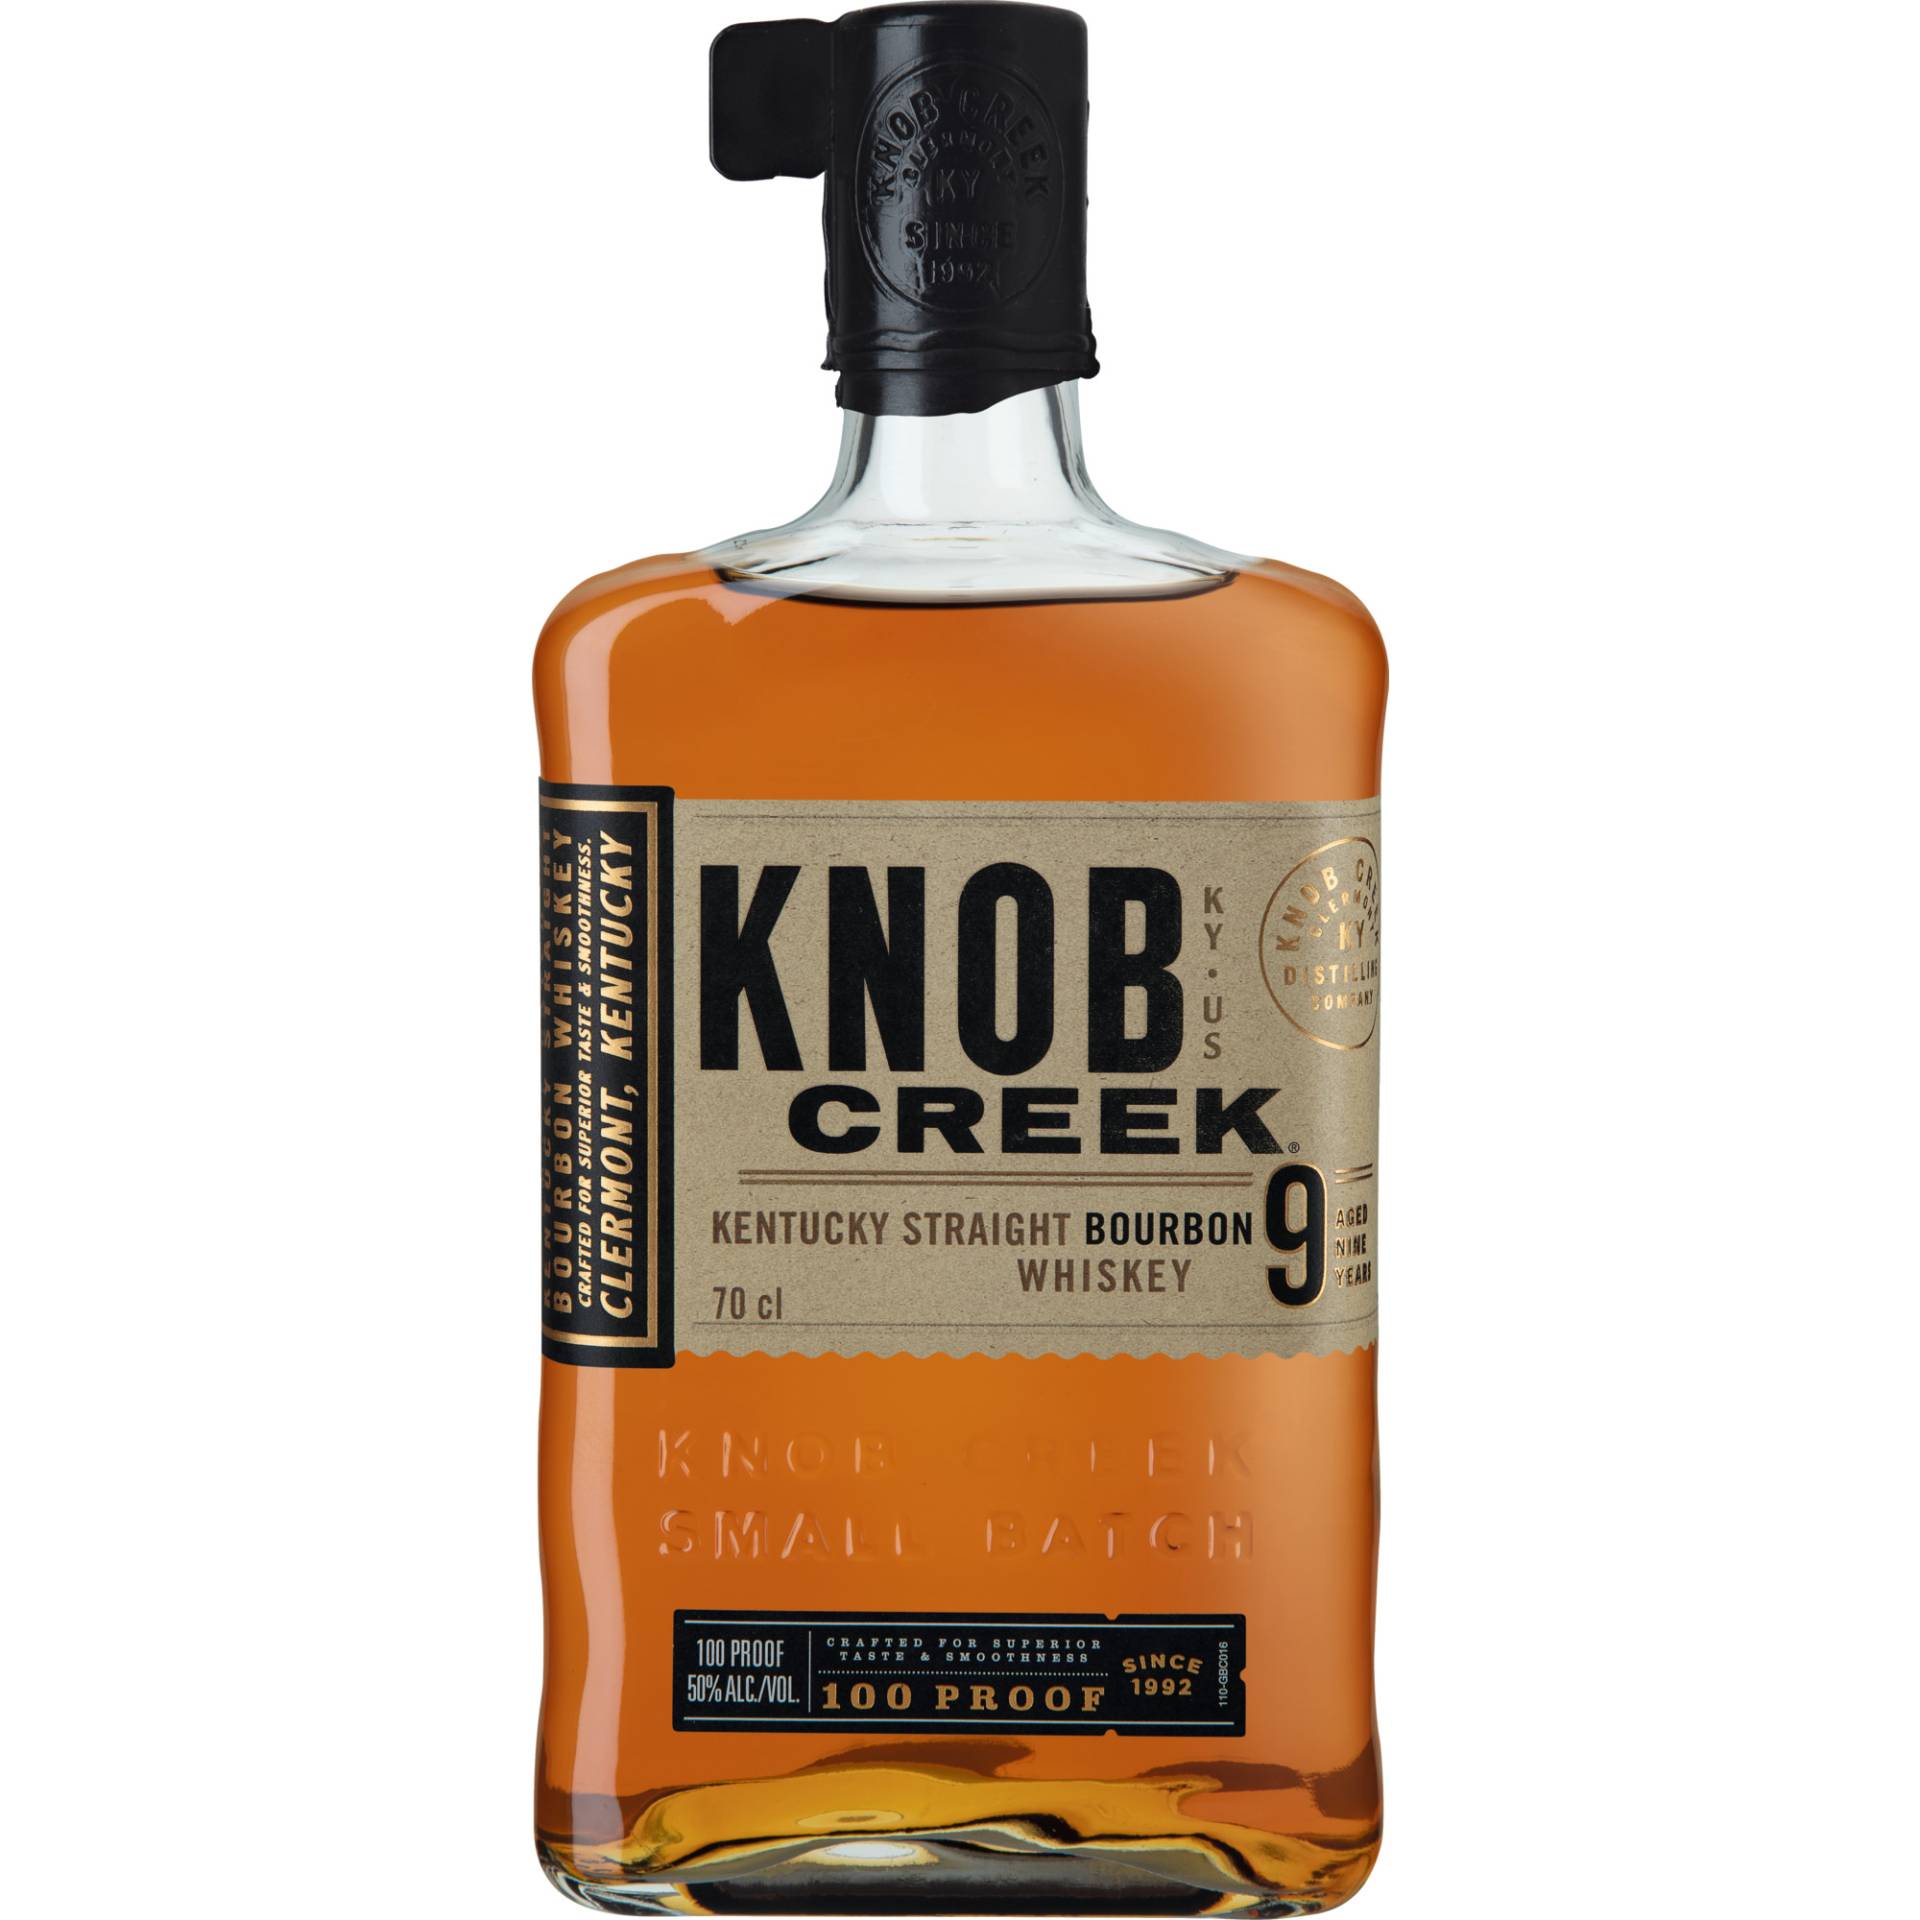 Knob Creek Kentucky Straight Bourbon Whiskey, 0,7 L, 50% Vol., Kentucky, Spirituosen von Knob Creek Distillery, Clermont, Kentucky, USA / BEAM INC.UK LTD. 310 St. Vincent Street Glasgow, G2 5RG, UK